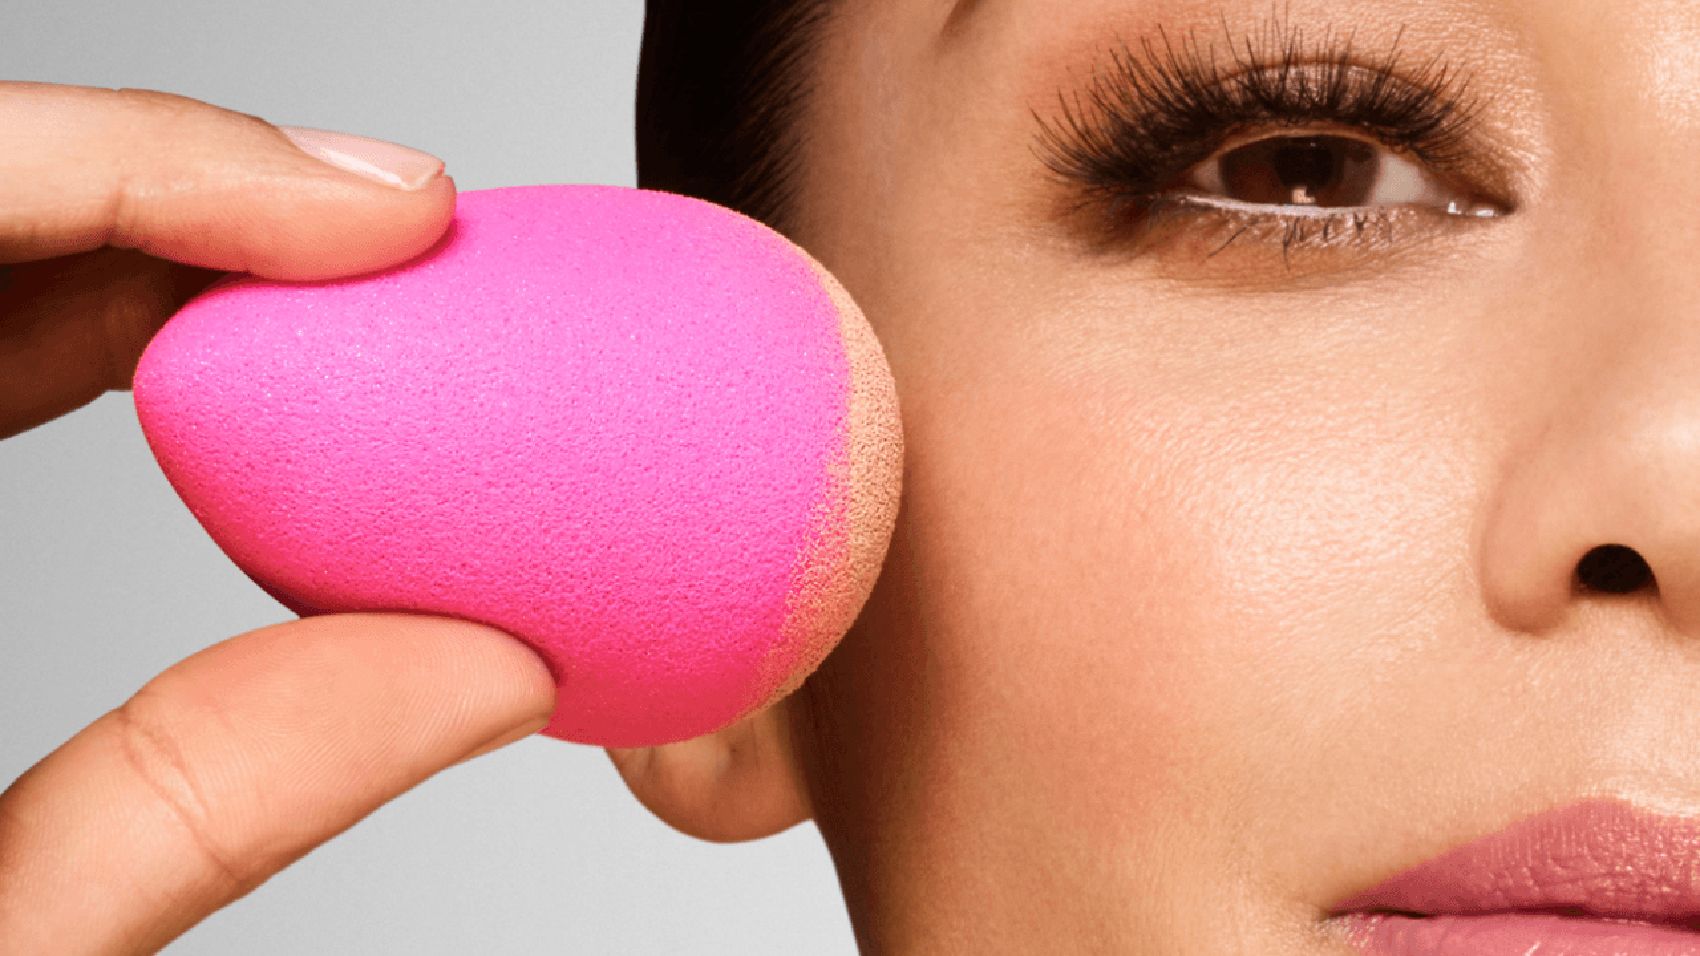 Beautyblender makeup sponge sale for 20% off CNN Underscored